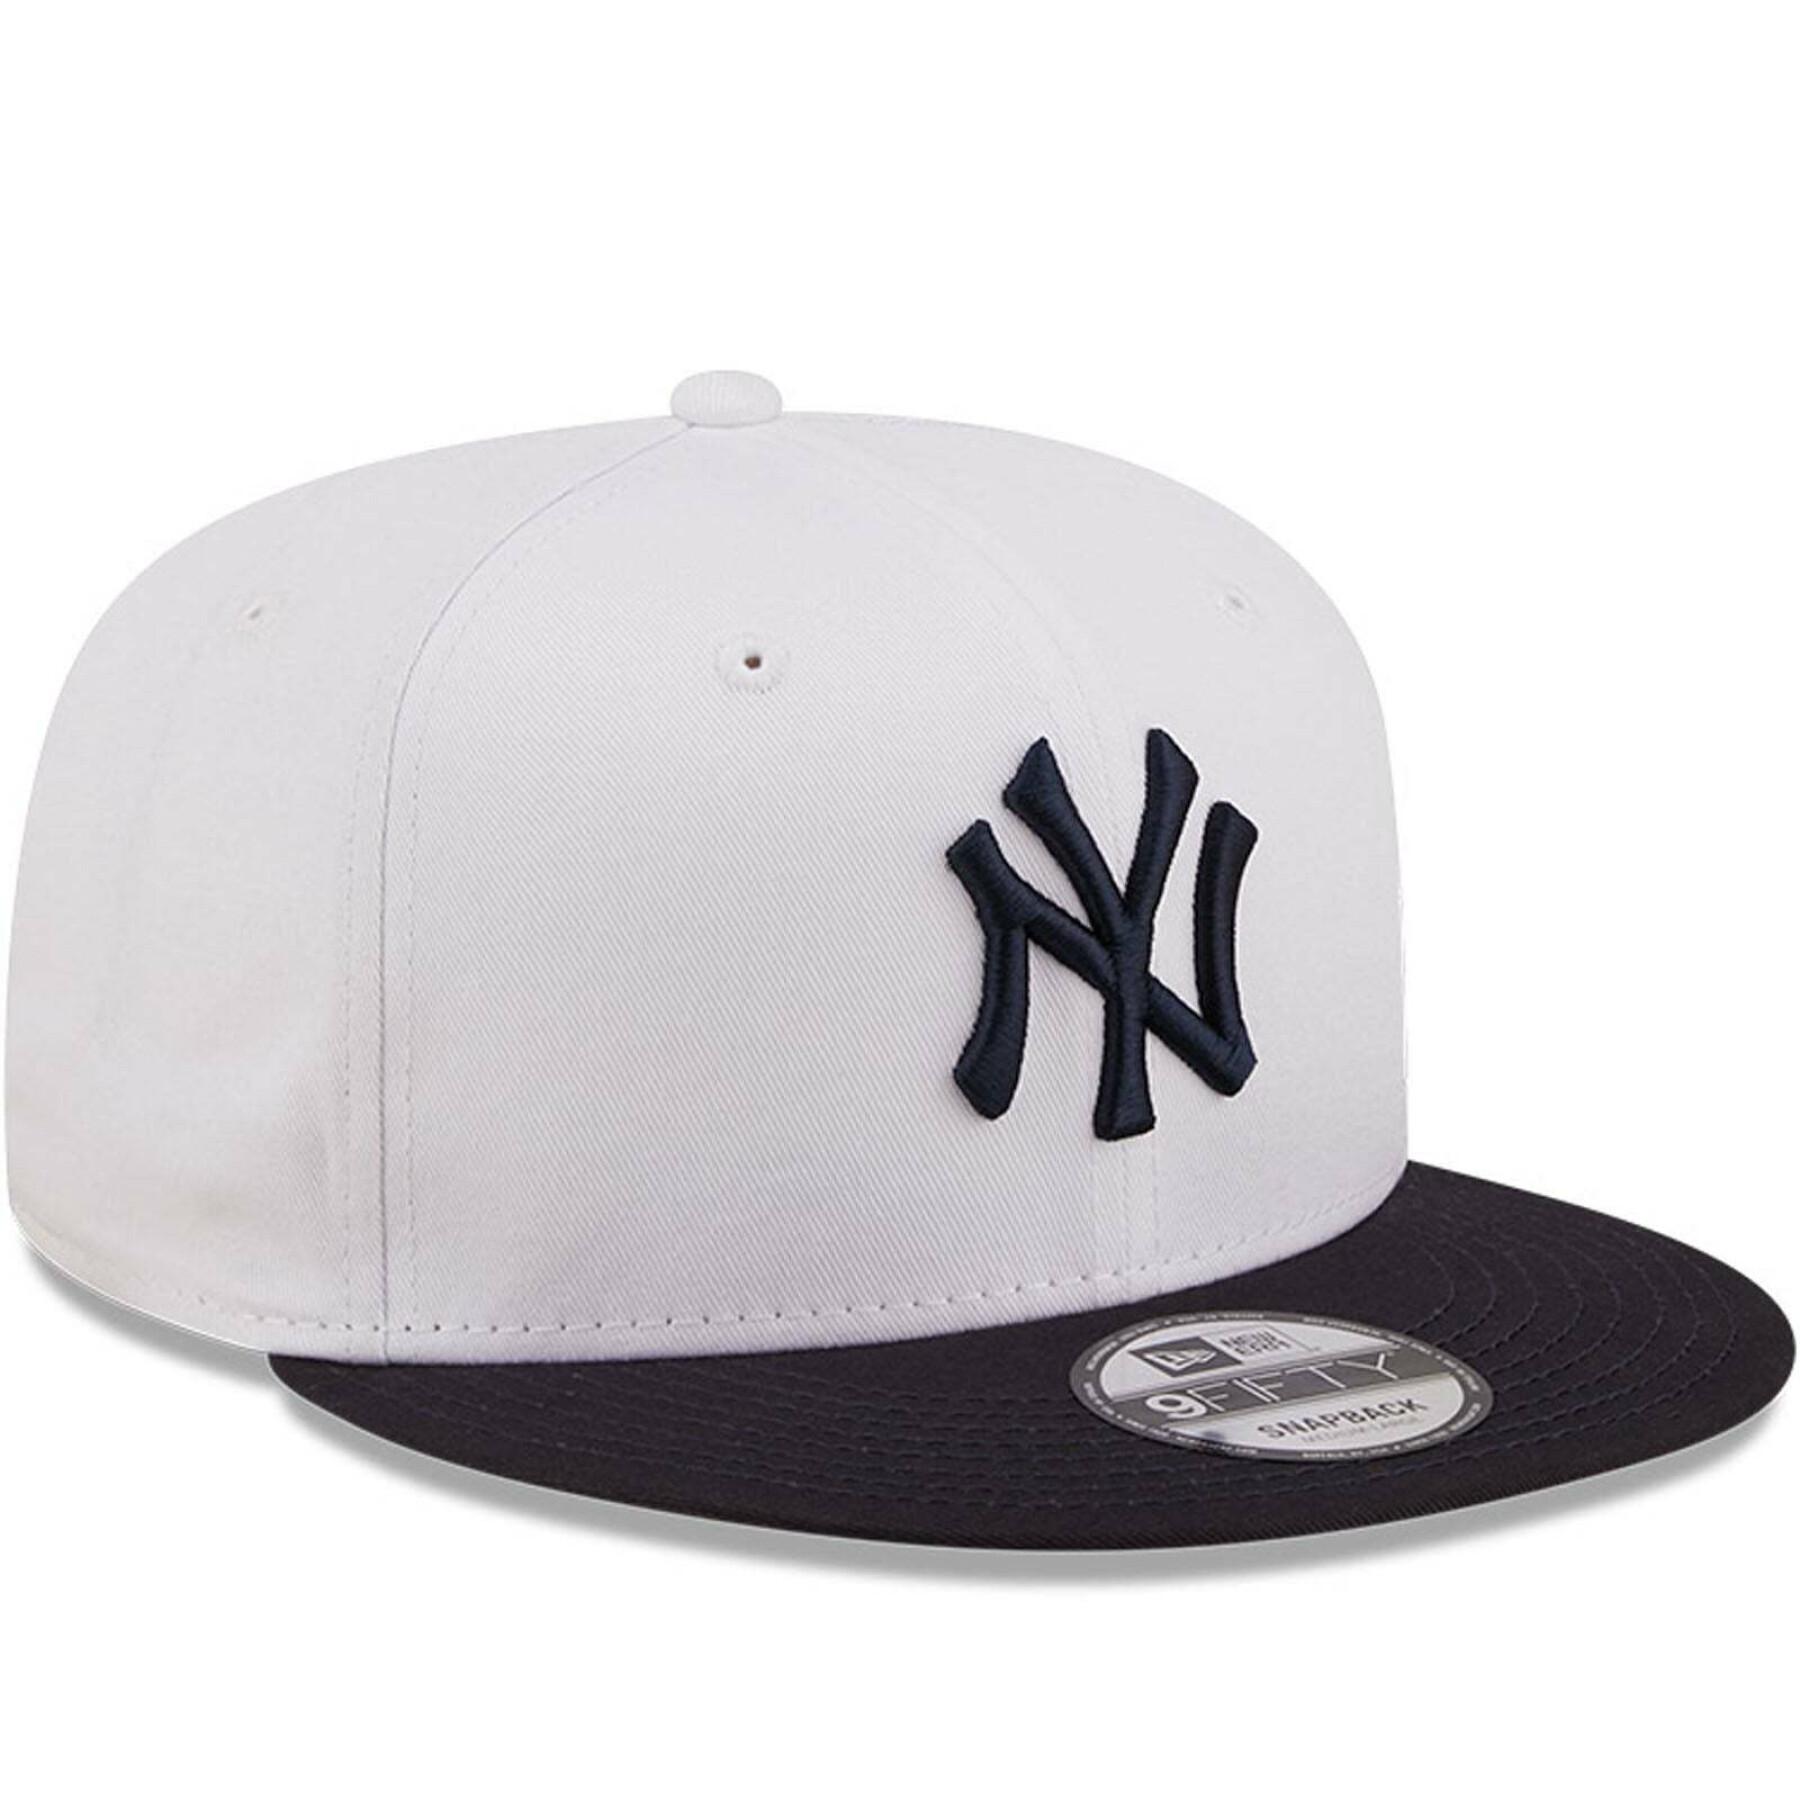 Gorra 9fifty New Era New York Yankees